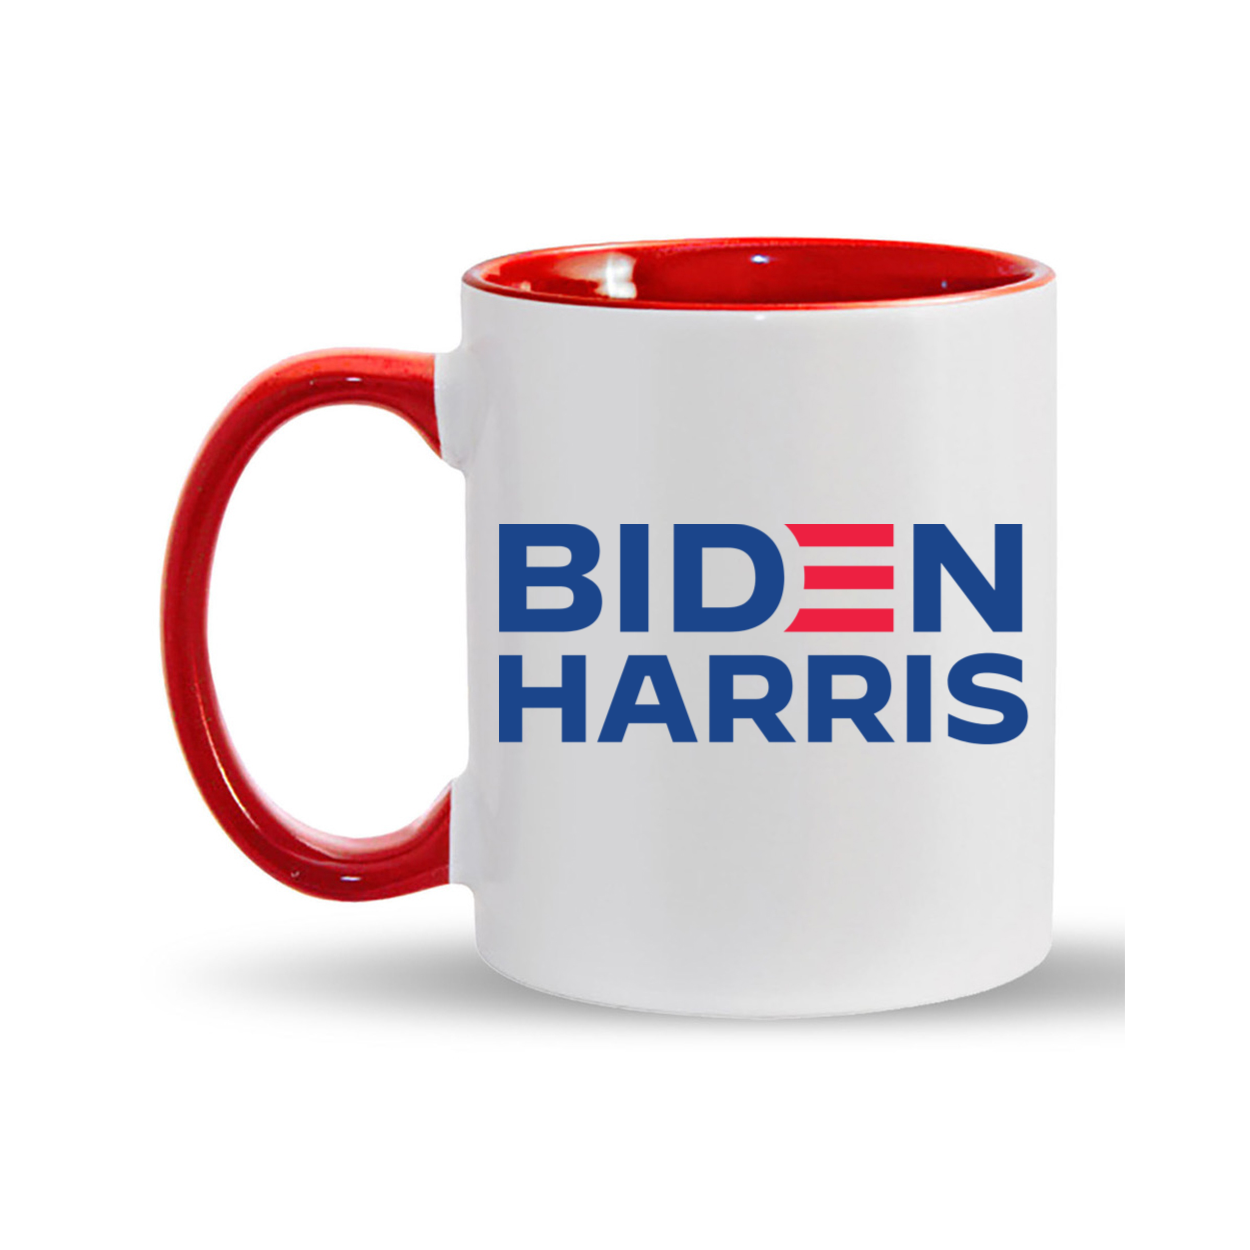 Biden Harris Campaign Collectible Coffee Mug